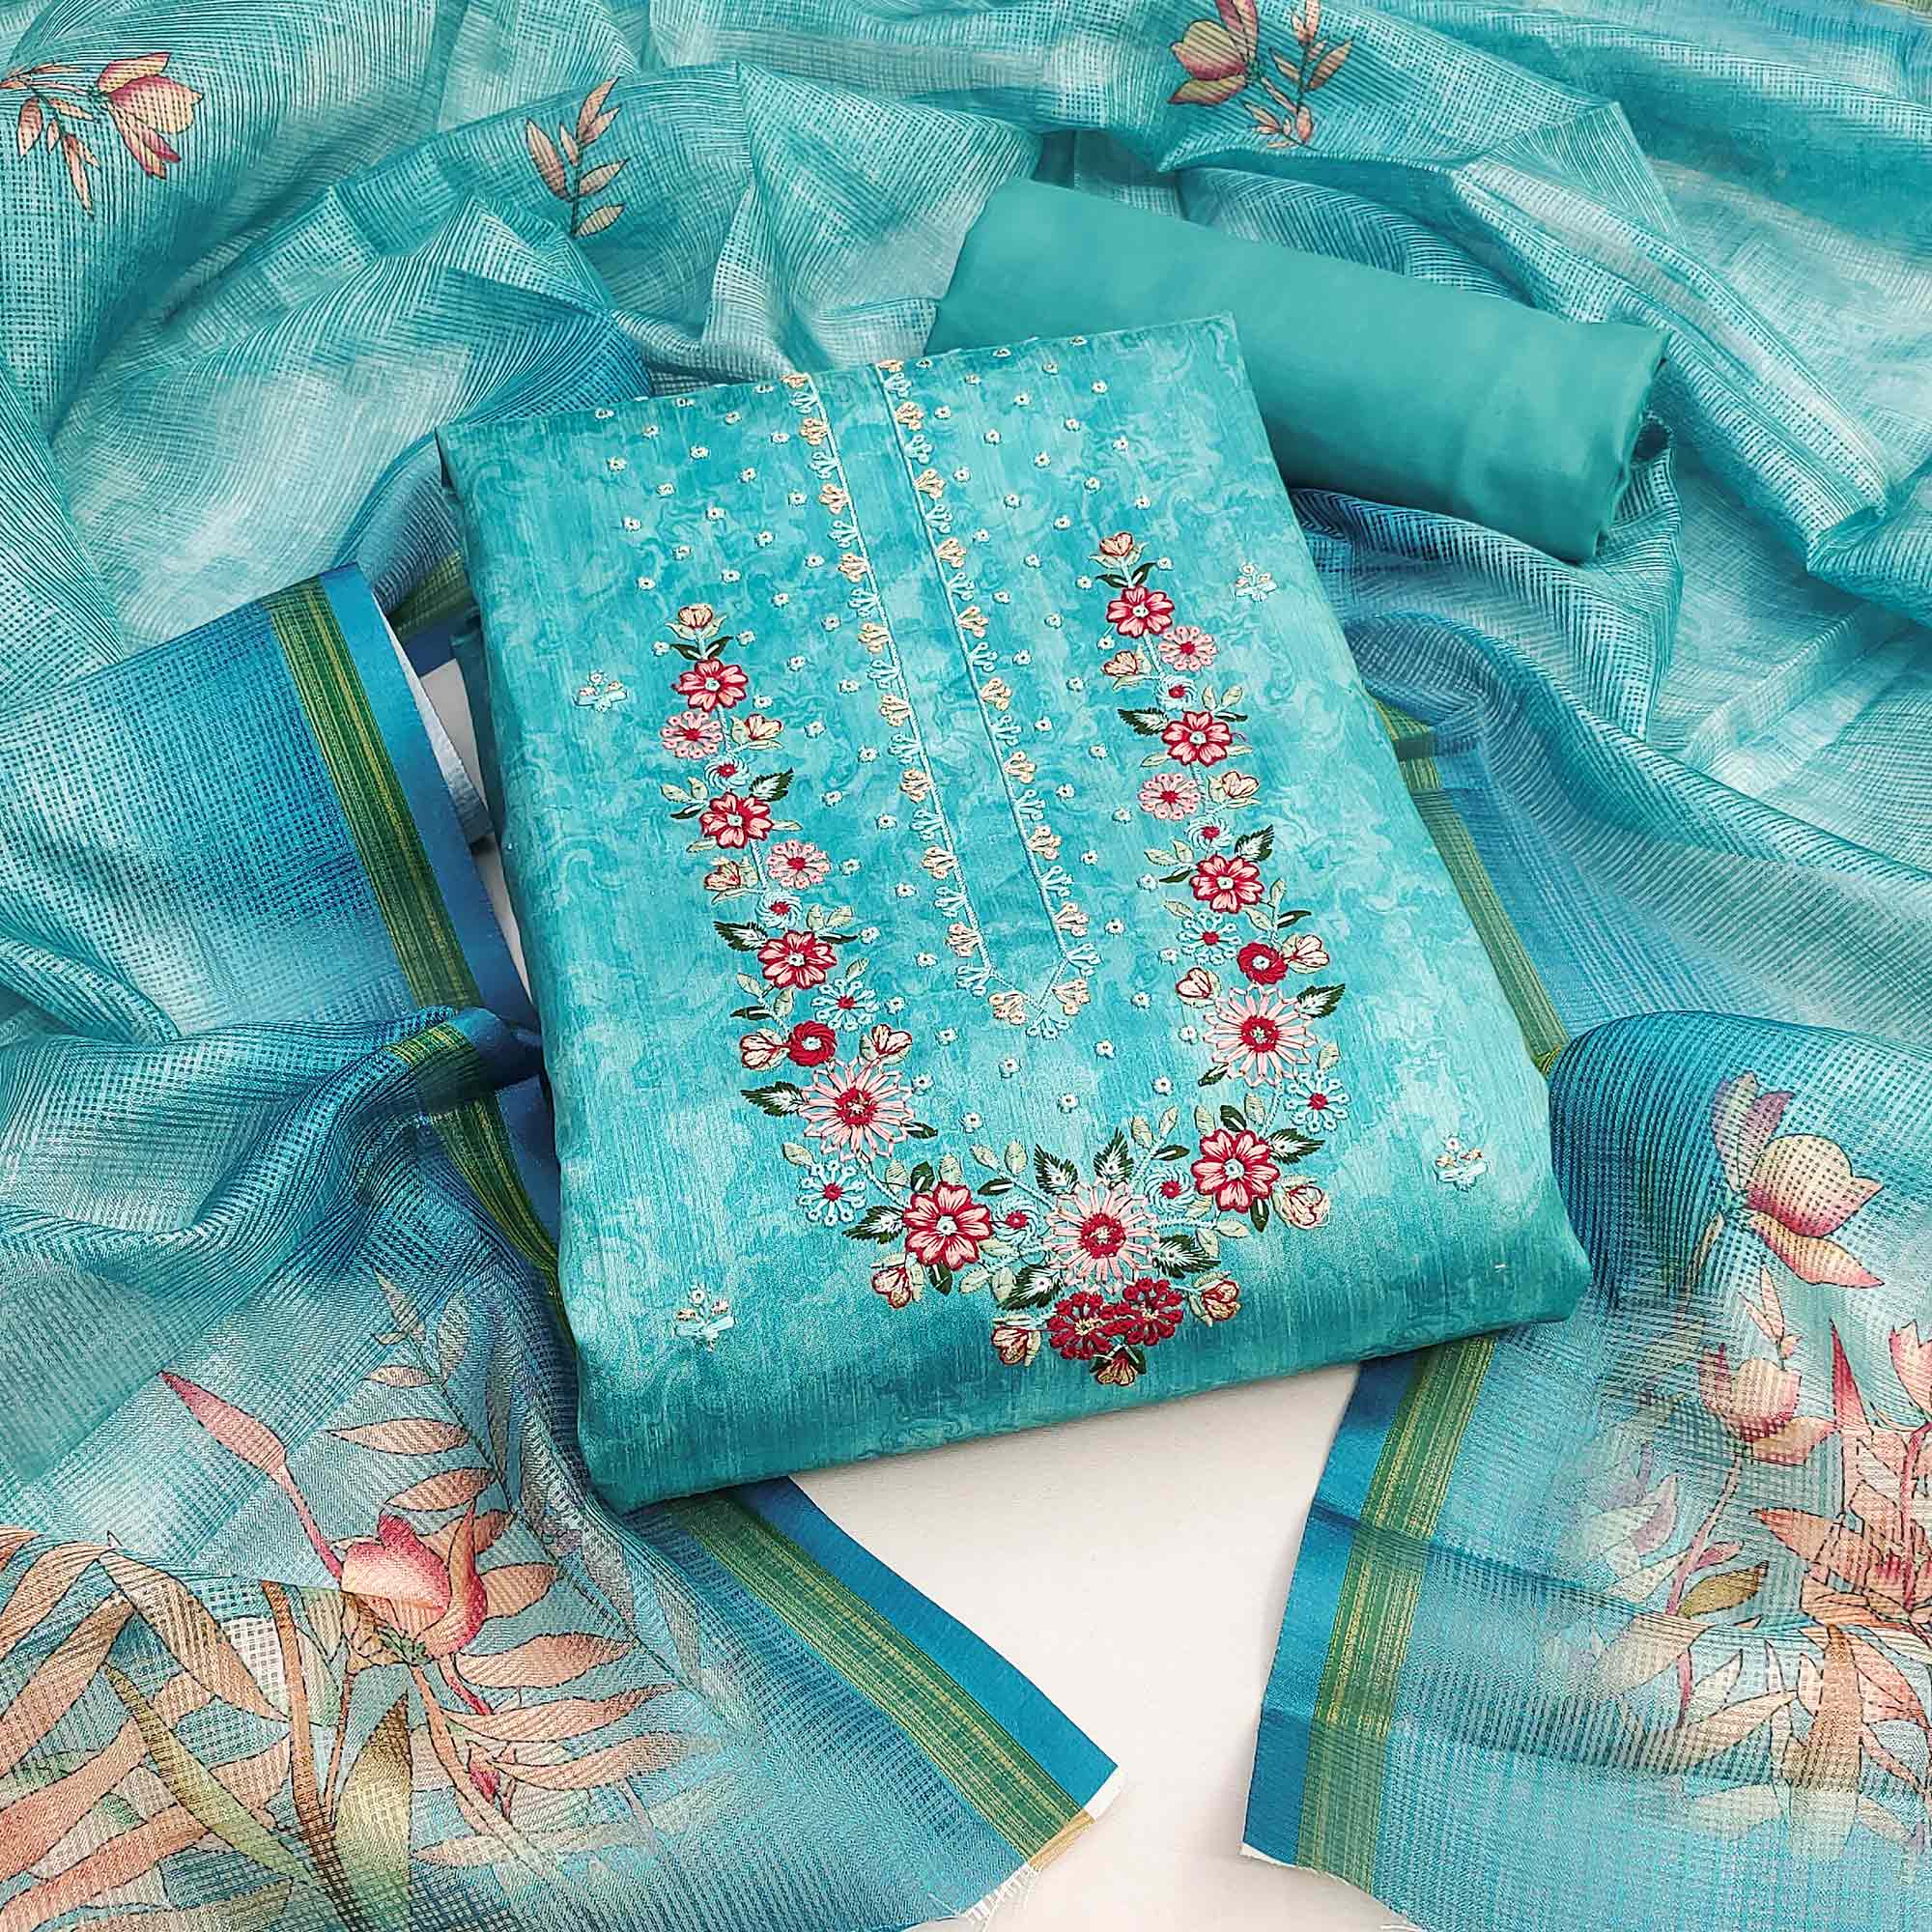 Aqua Blue Embroidered Art Silk Dress Material